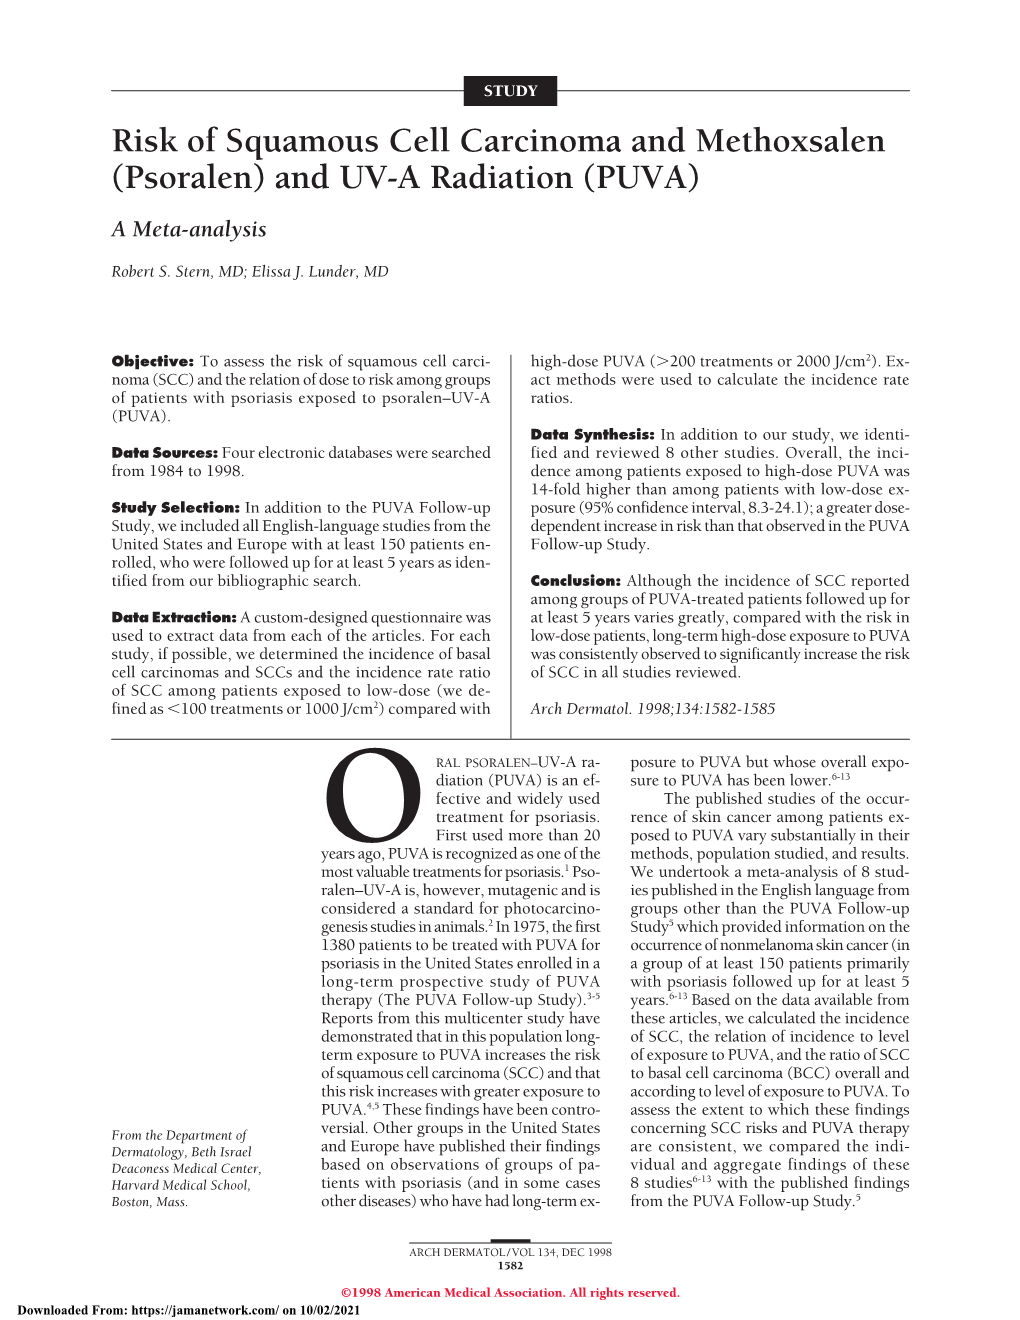 (Psoralen) and UV-A Radiation (PUVA) a Meta-Analysis